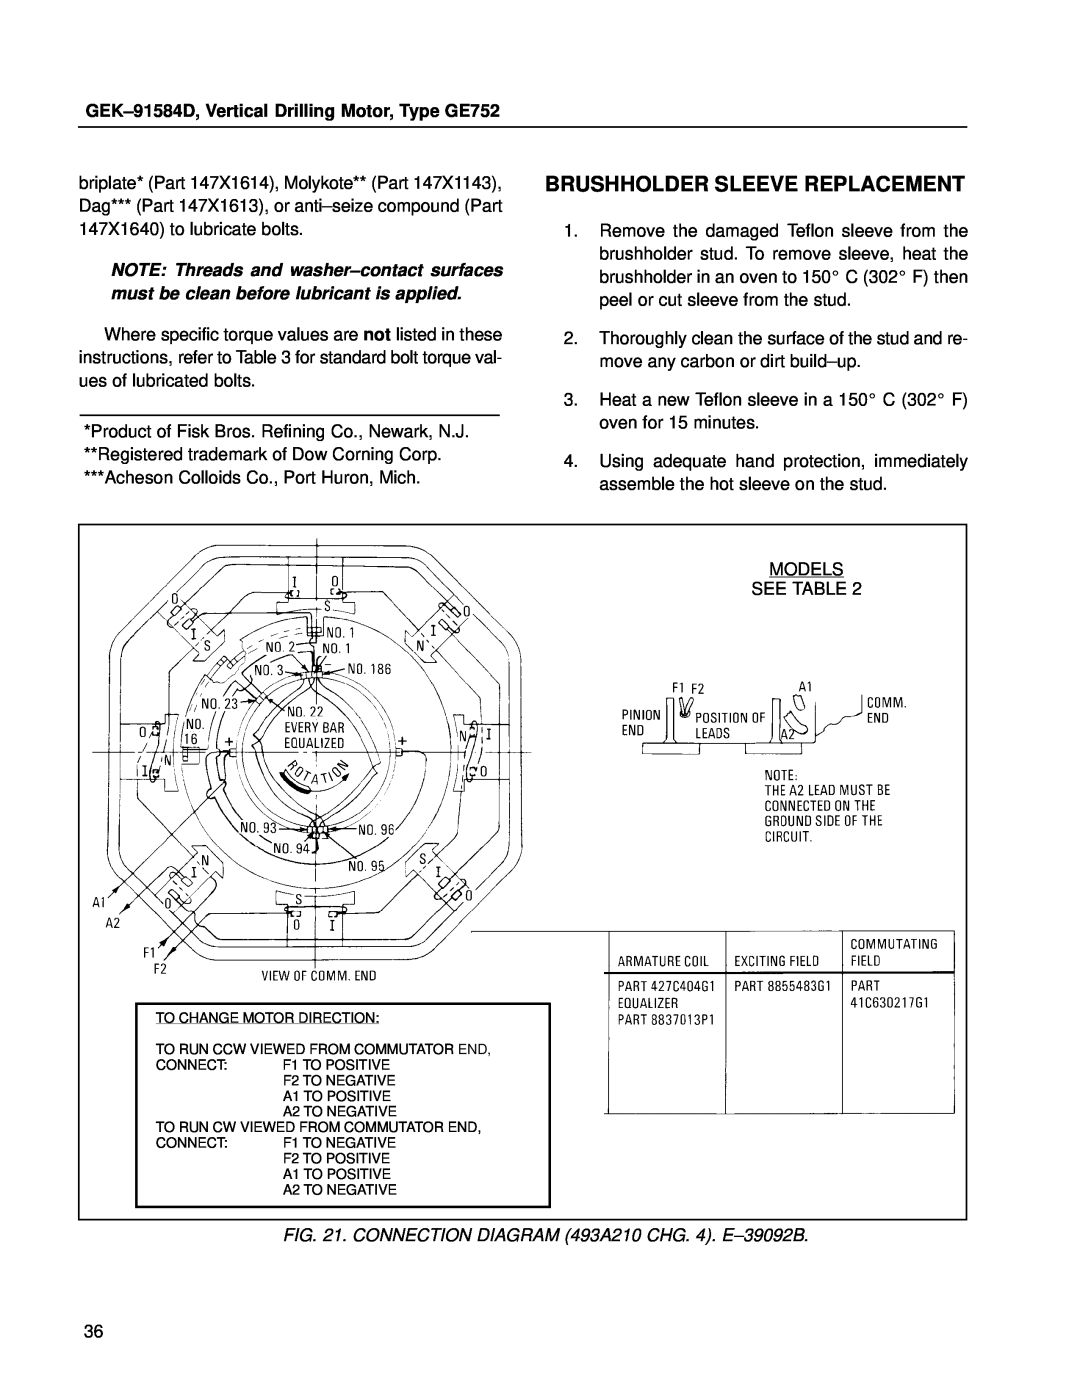 GE manual CONNECTION DIAGRAM 493A210 CHG. 4. E±39092B, GEK±91584D, Vertical Drilling Motor, Type GE752 